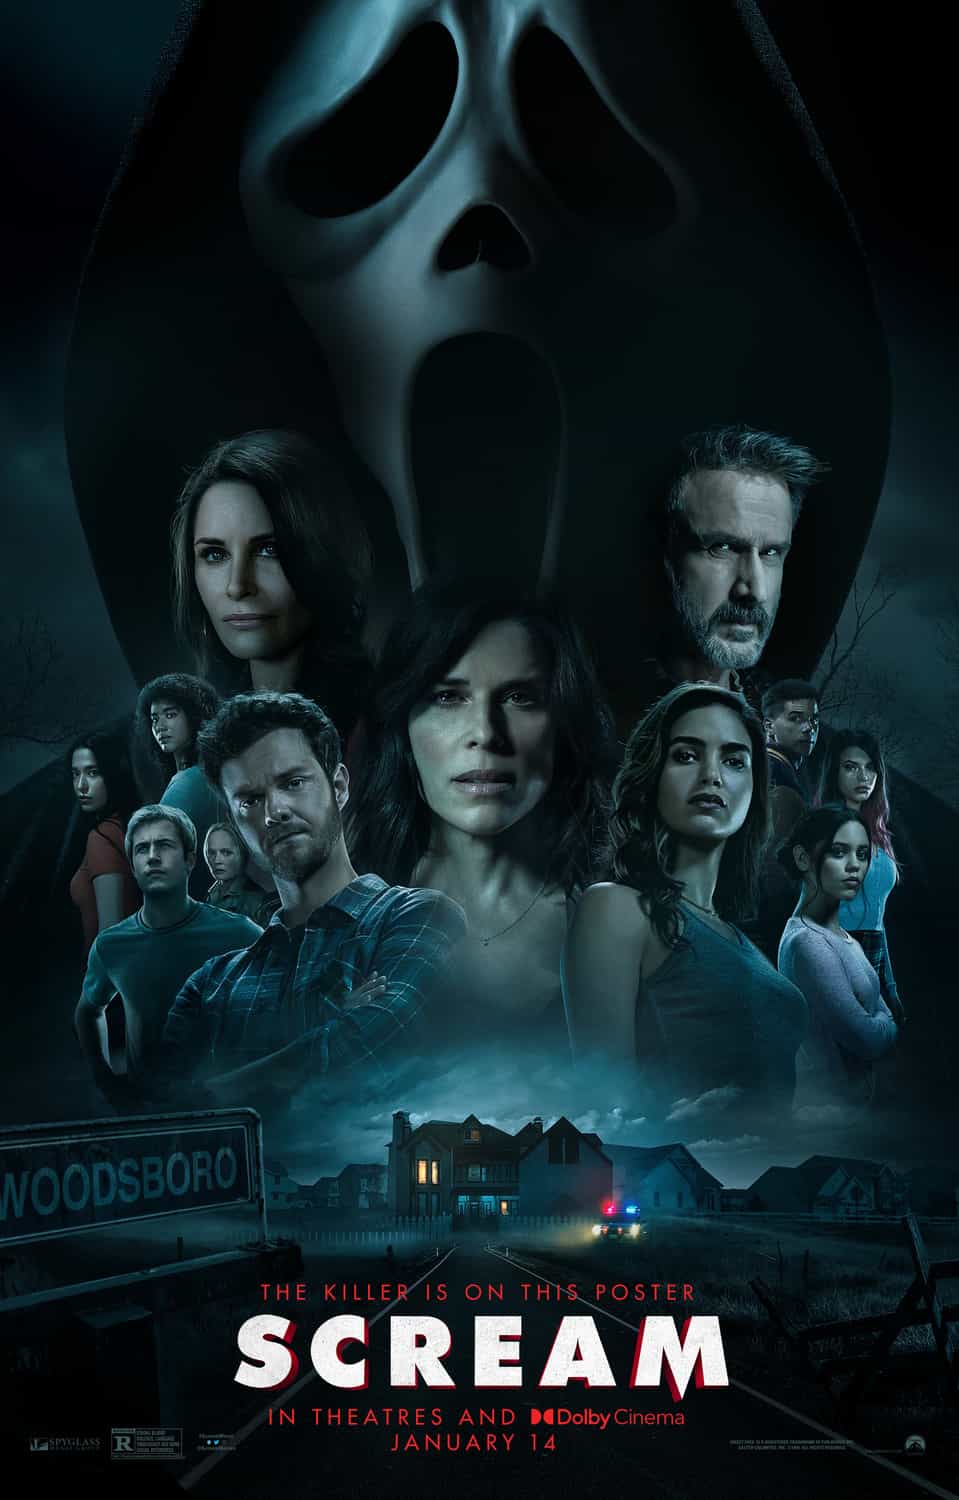 UK new movie preview weekend 14th January 2022 - Scream, Embrace Again and Save the Cinema - #scream #embraceagain #savethecinema